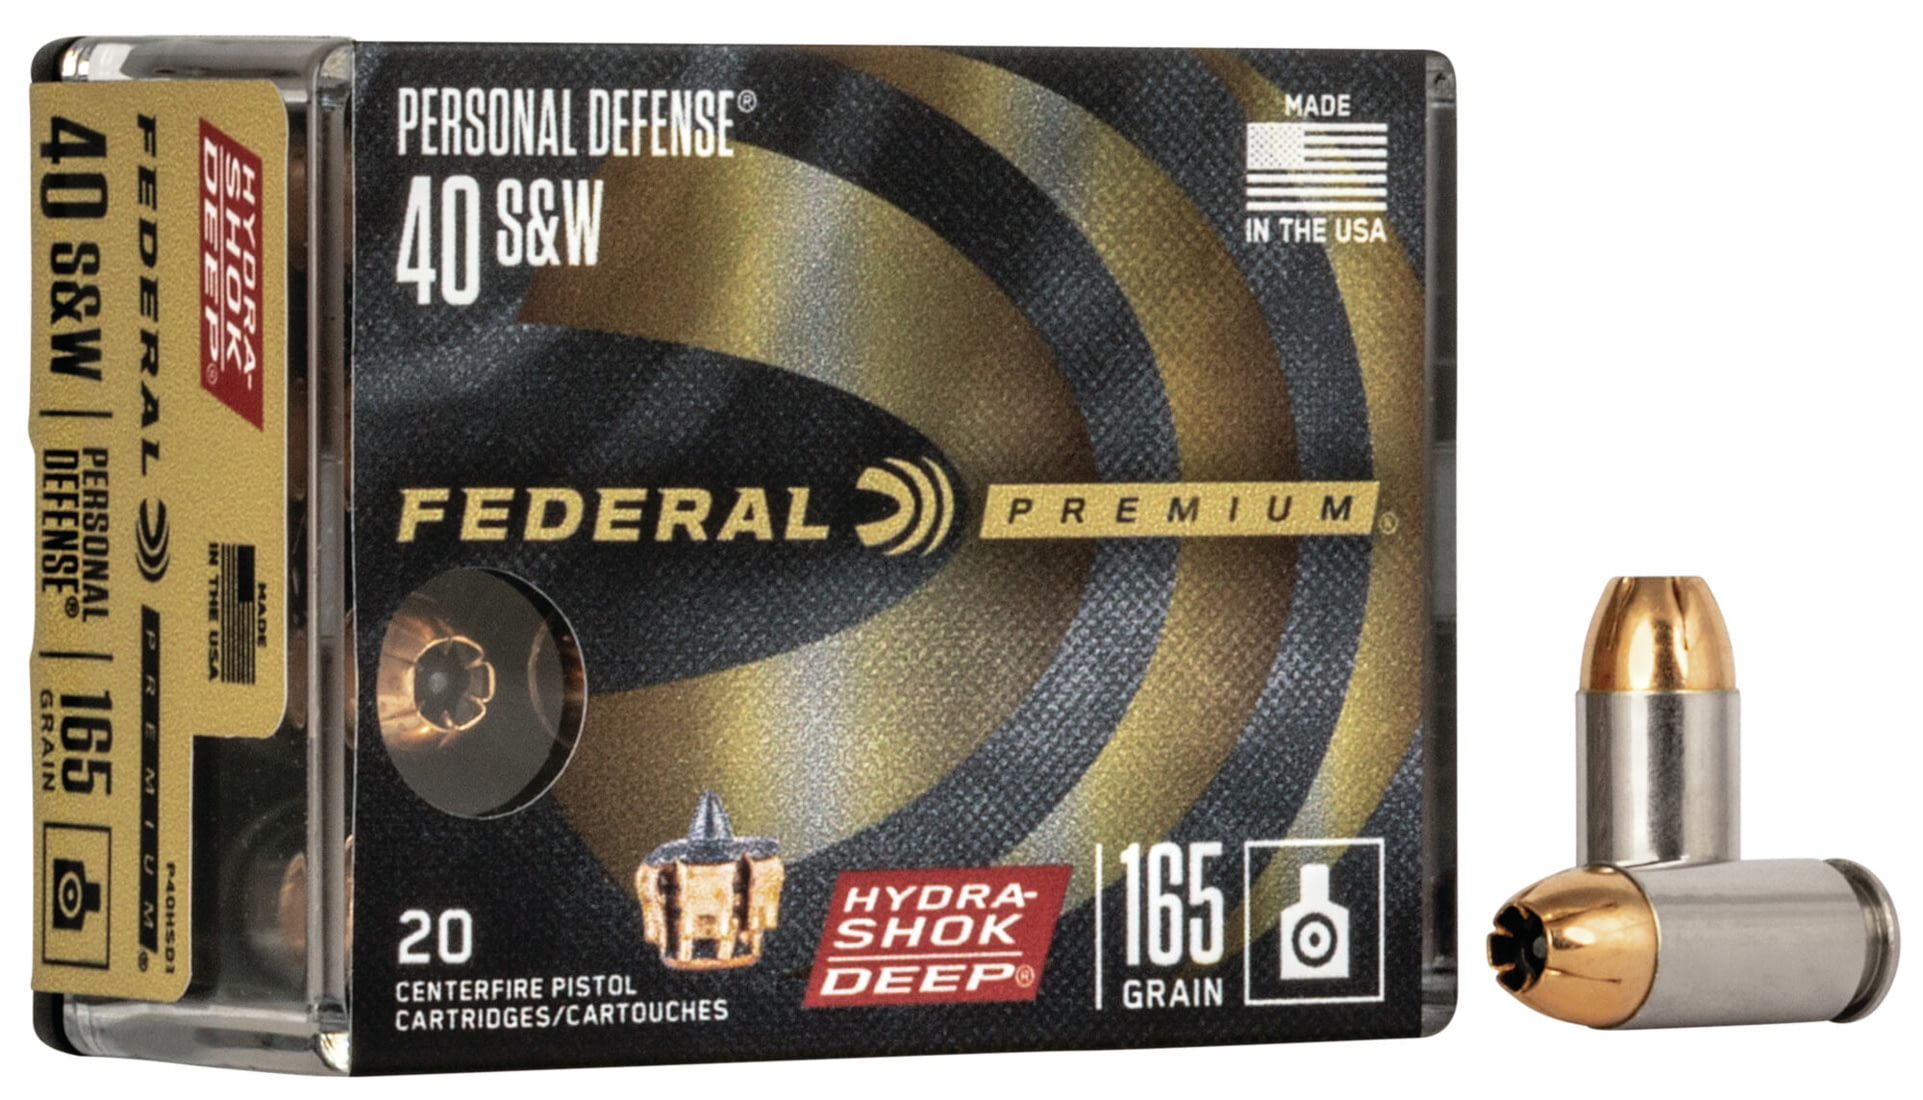 Federal Premium Centerfire Handgun Ammunition .40 S&W 165 grain Hydra-Shok Deep Jacketed Hollow point Centerfire Pistol Ammunition